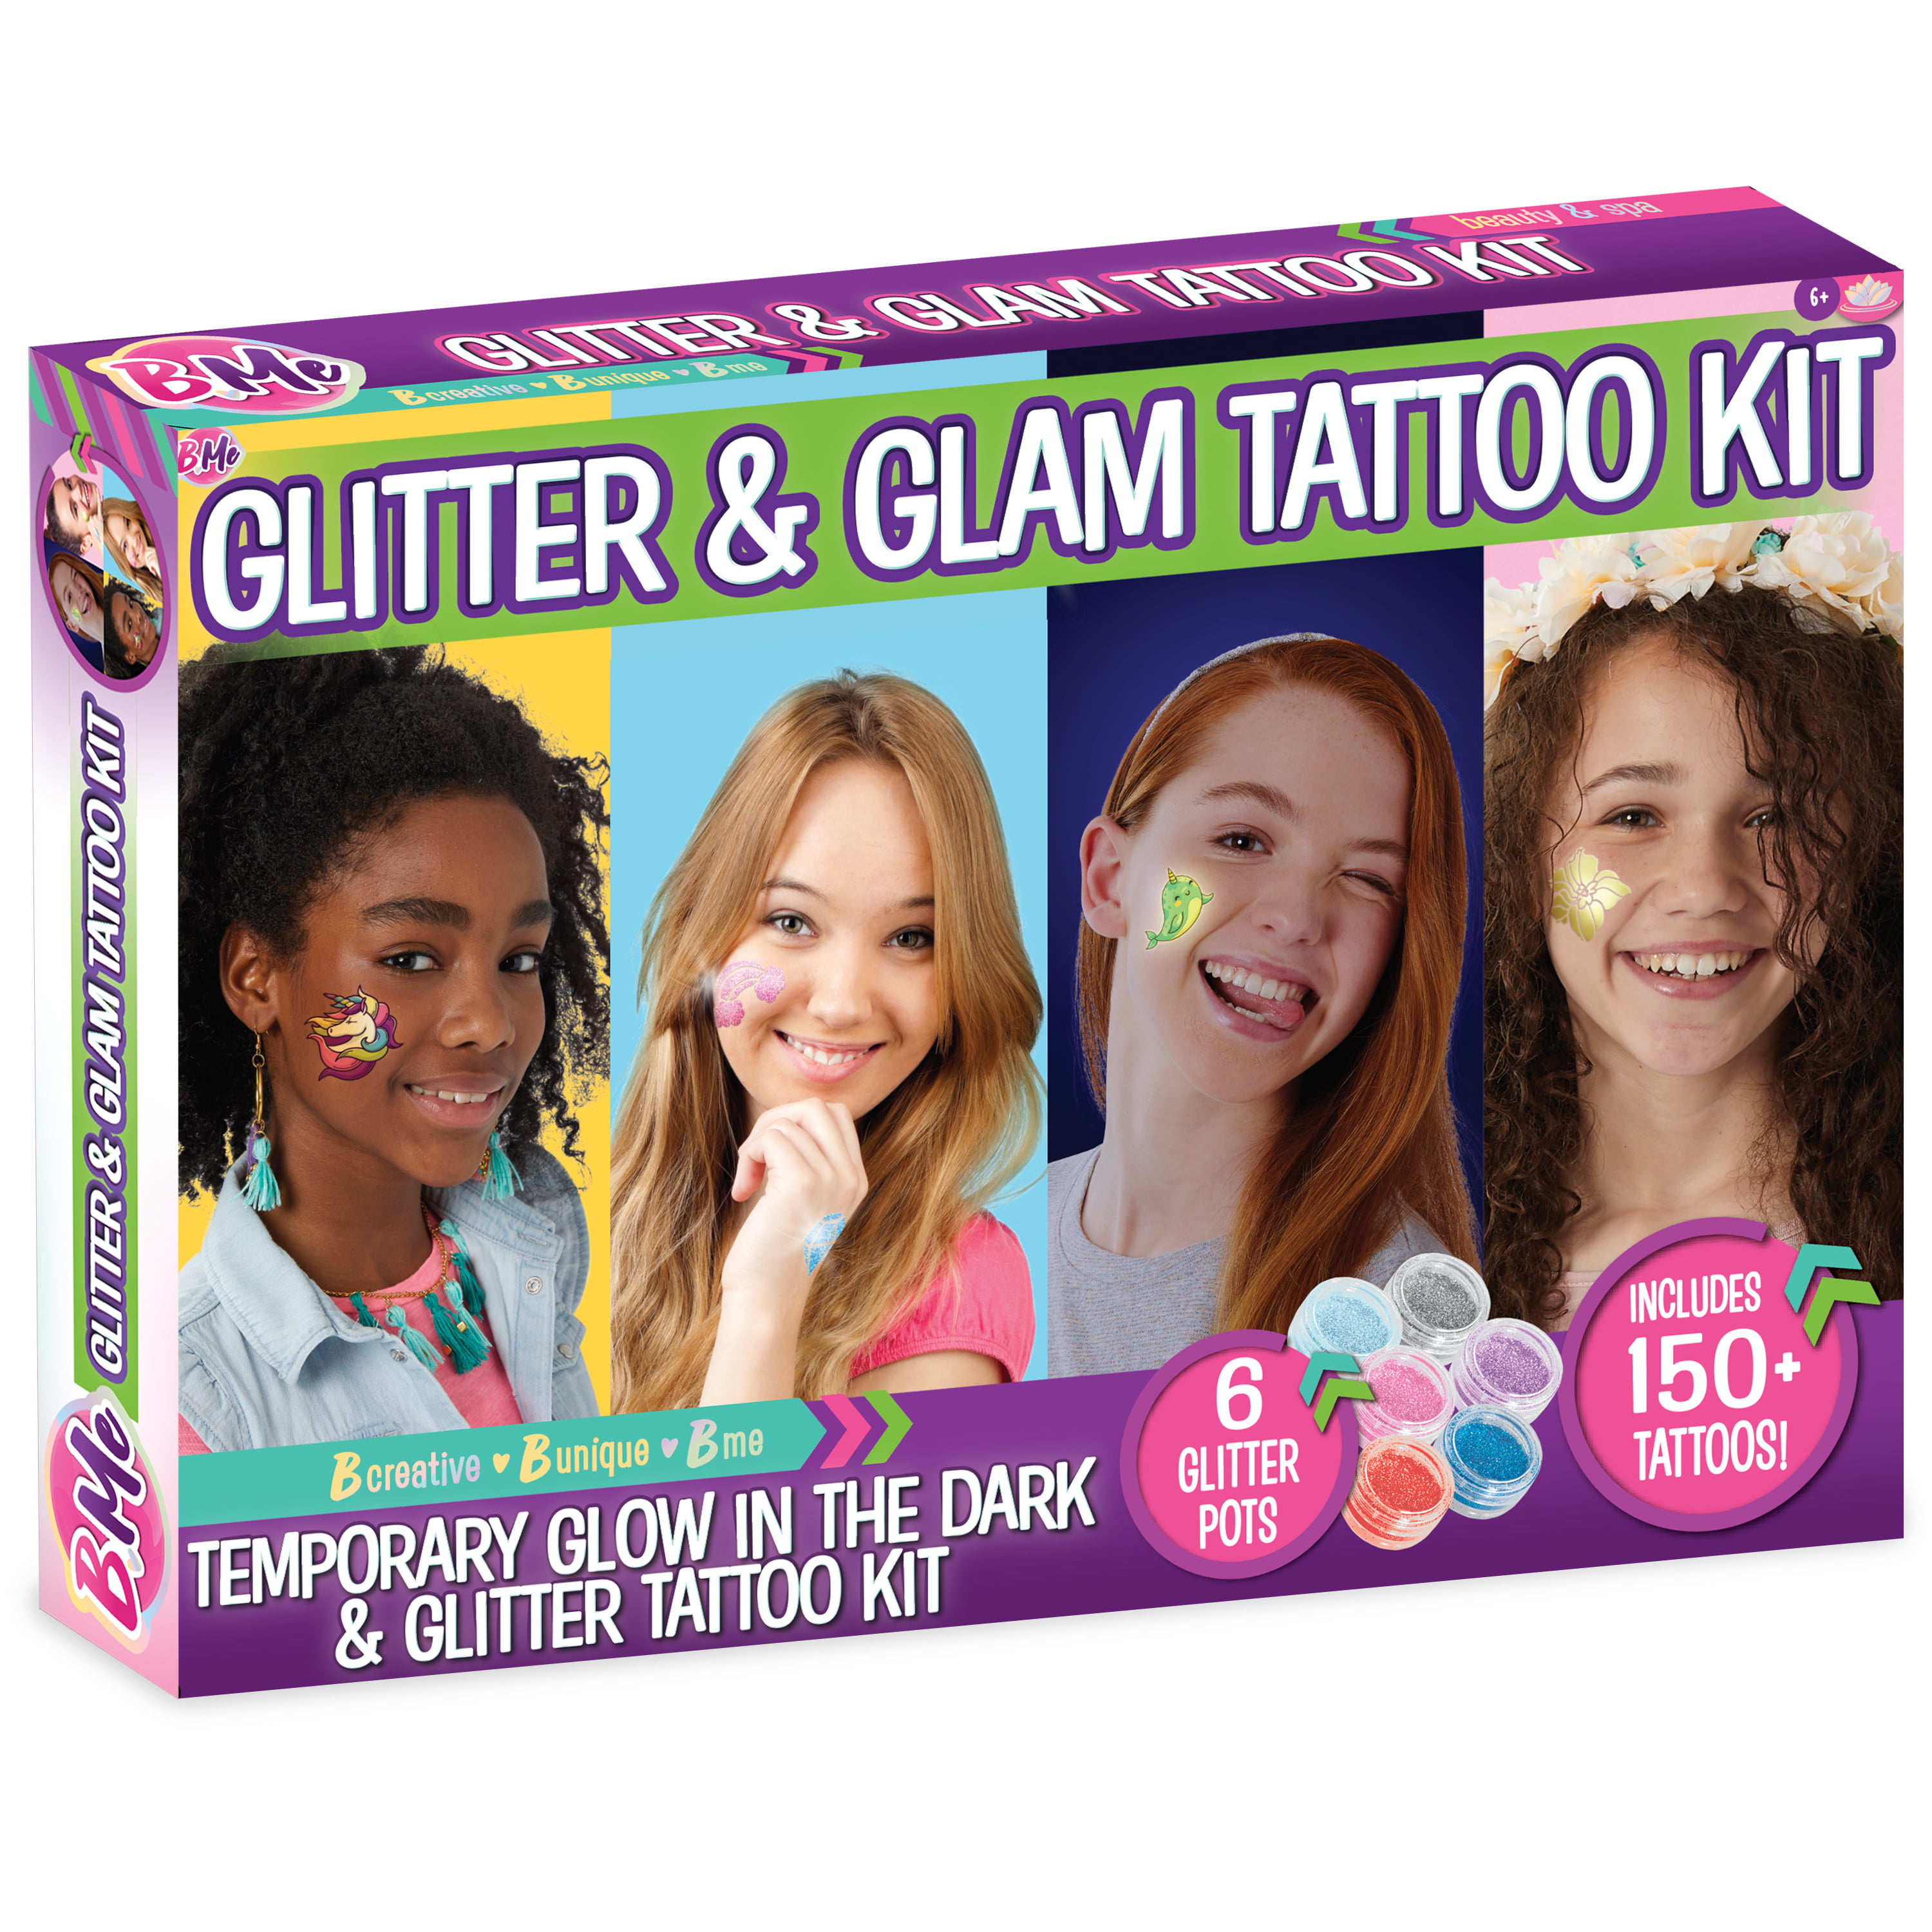 6 x Girls Kids Childrens Fairy Glitter Tattoos Transfers Party Loot Bag Fillers